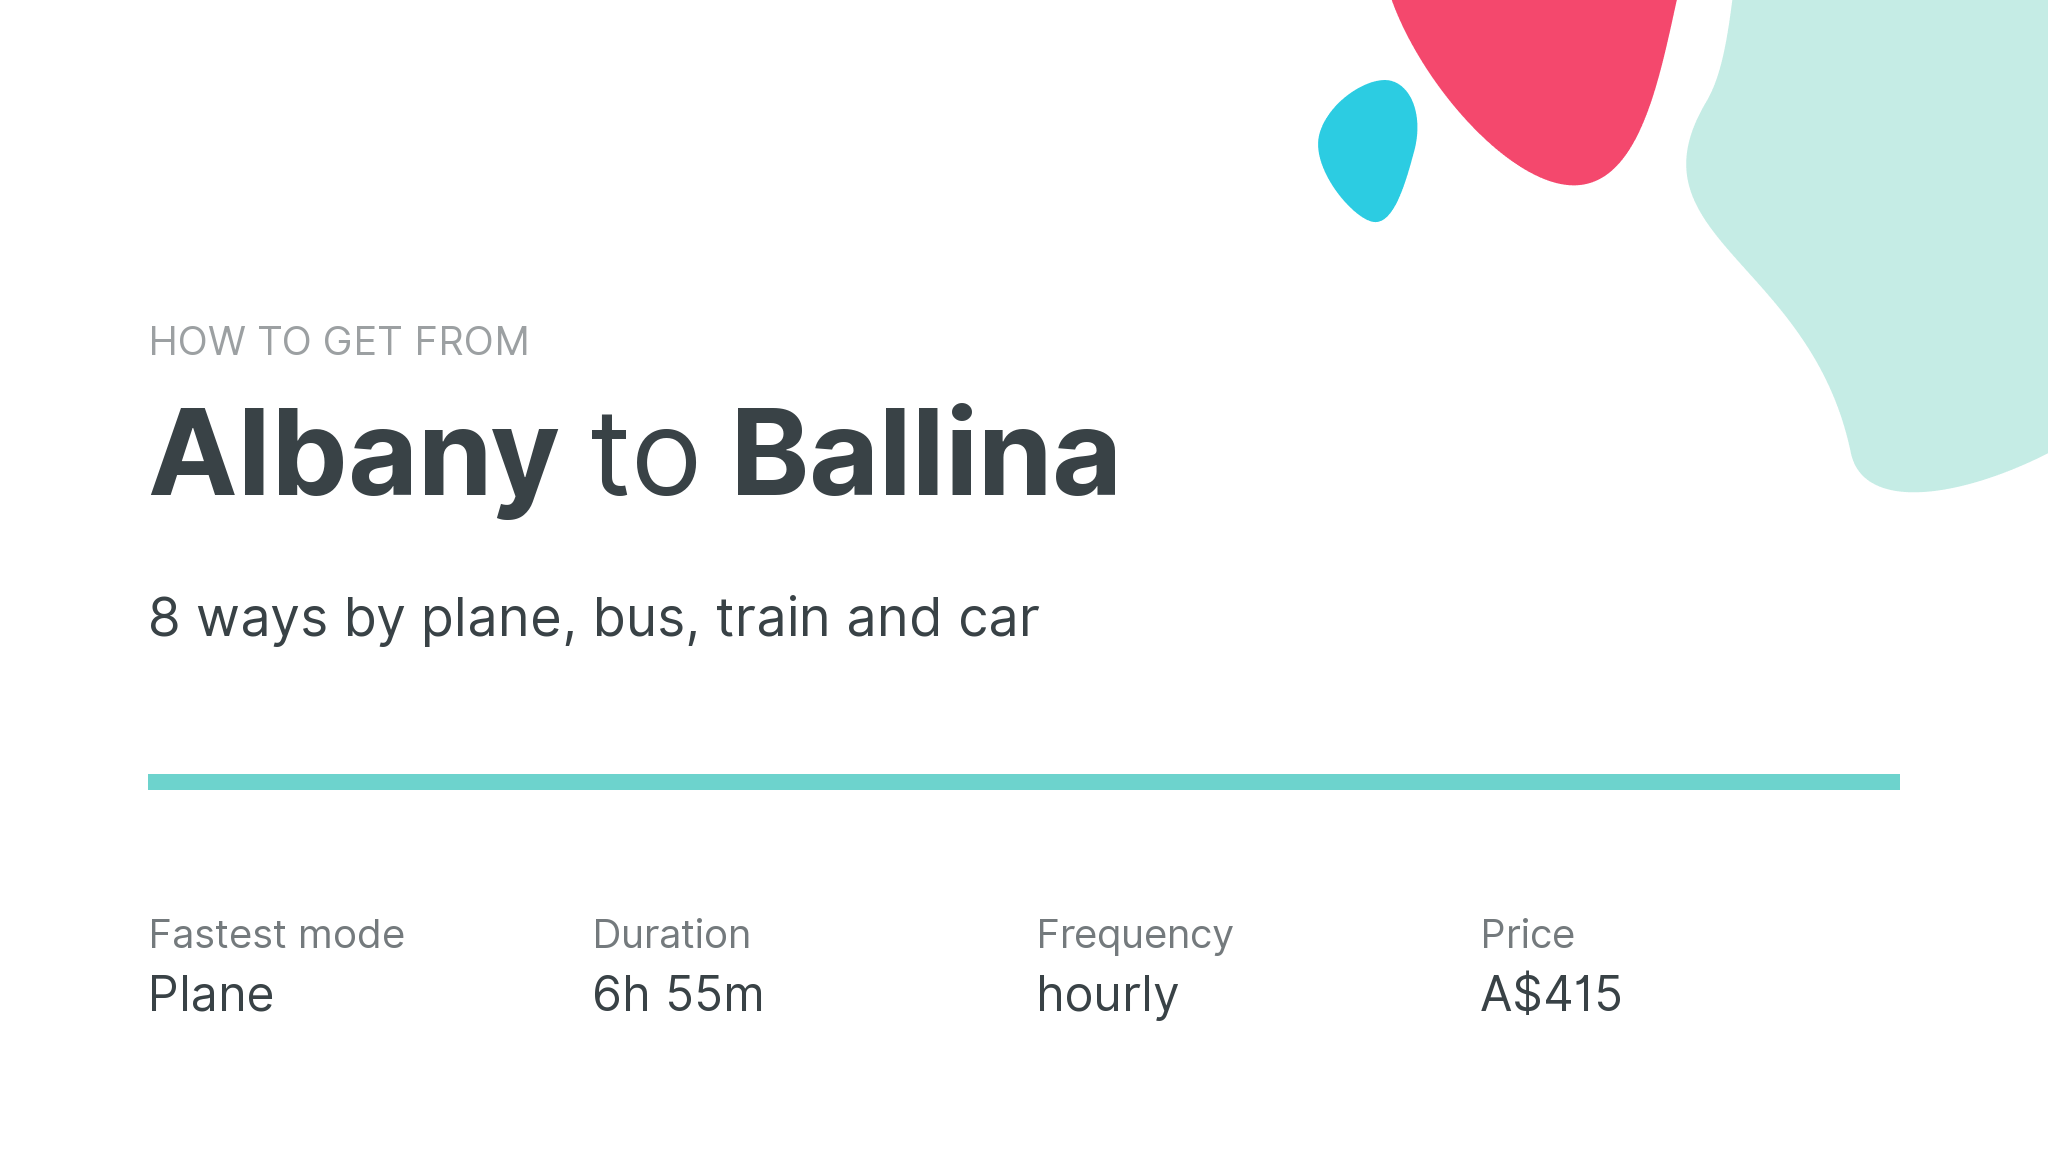 How do I get from Albany to Ballina